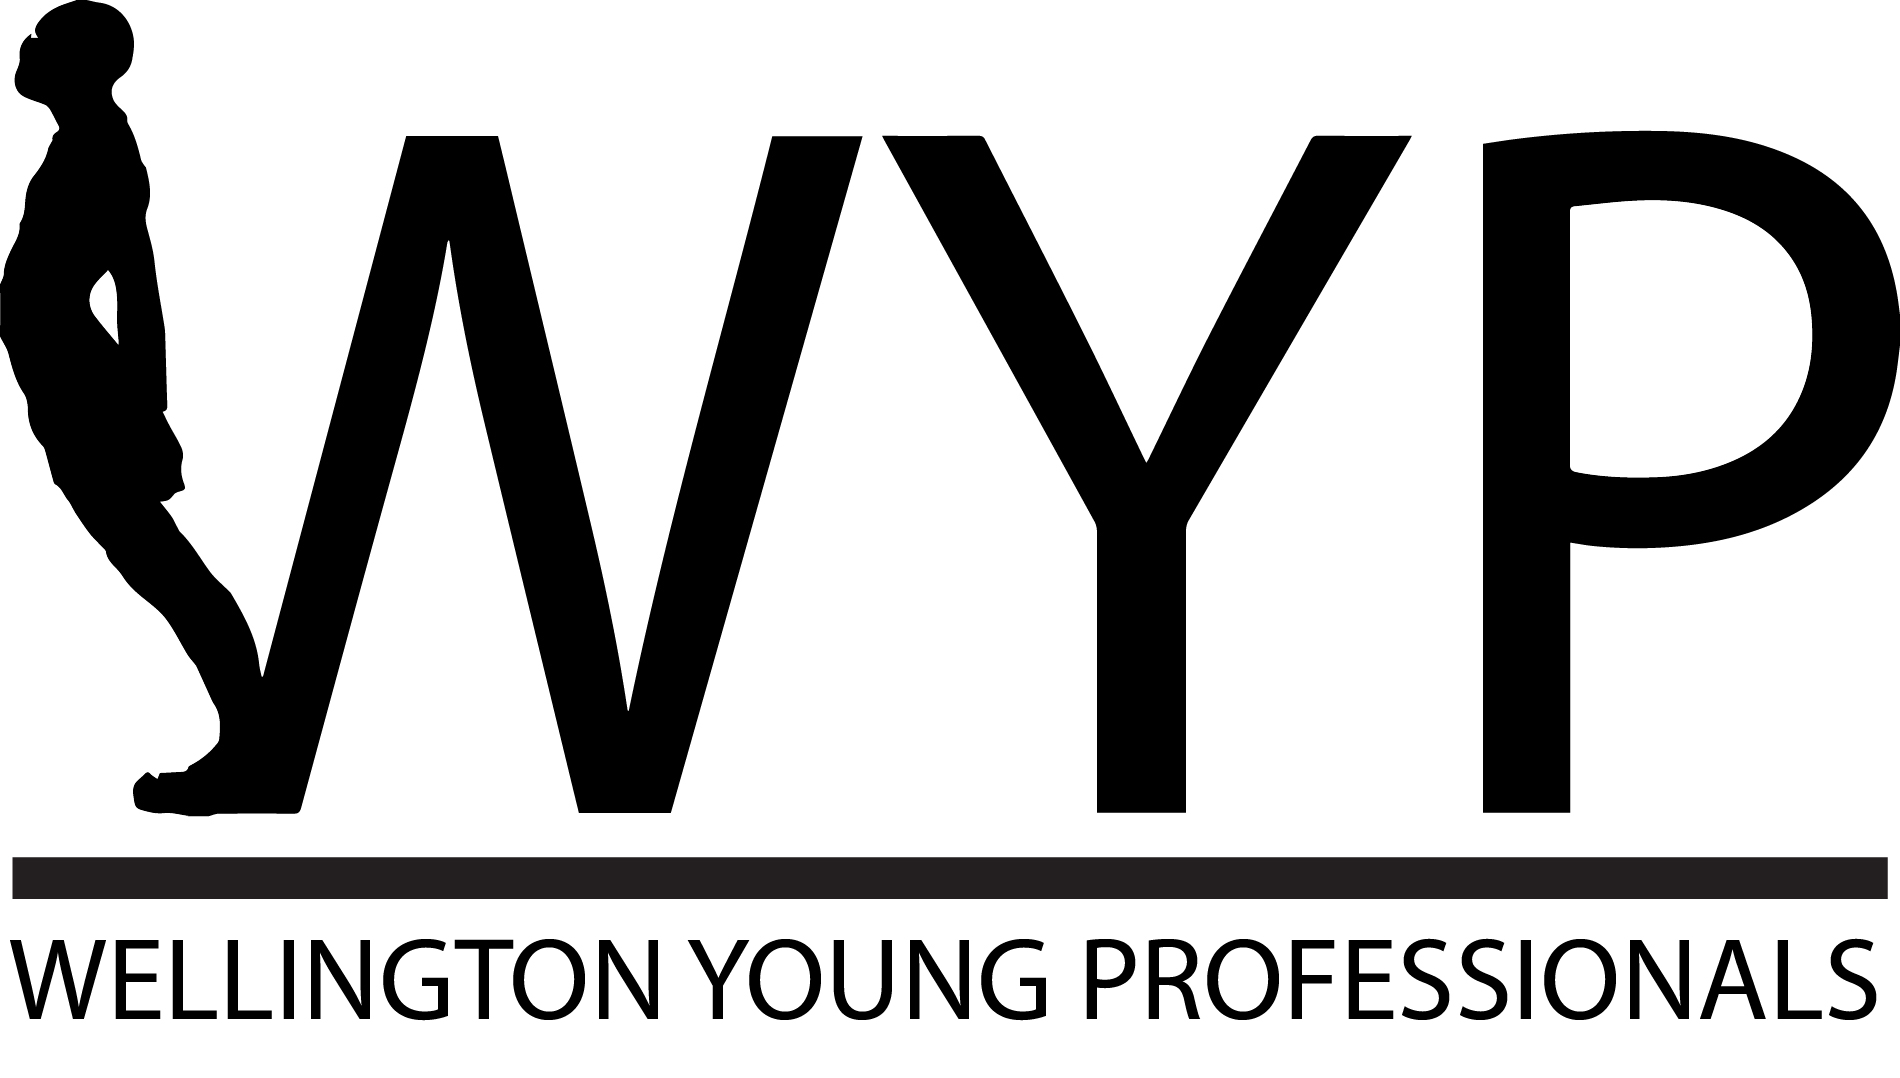 Wellington Young Professionals